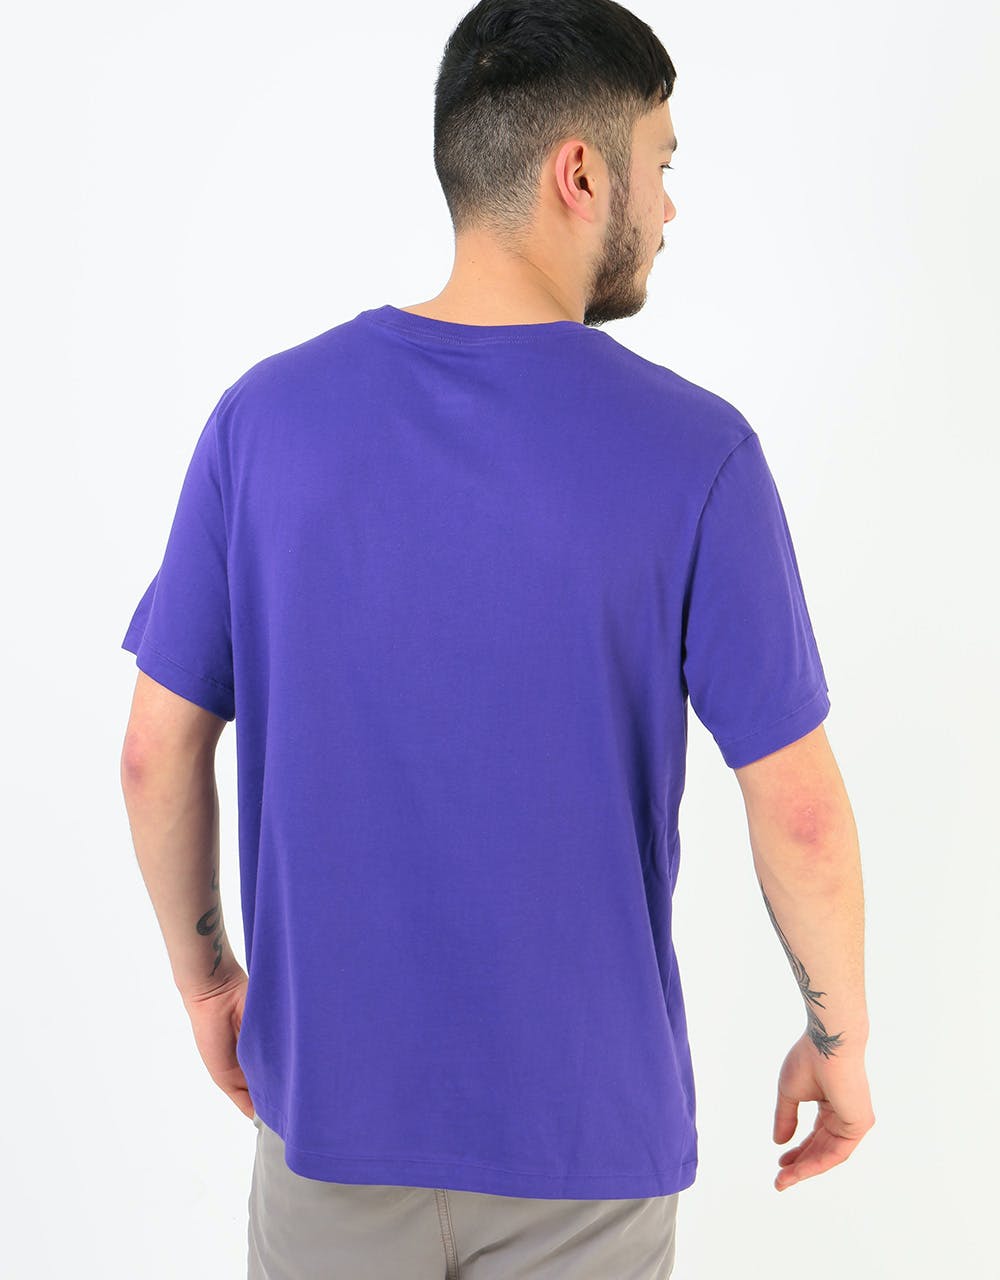 Nike SB Logo Dri-Fit T-Shirt - Court Purple/Laser Blue